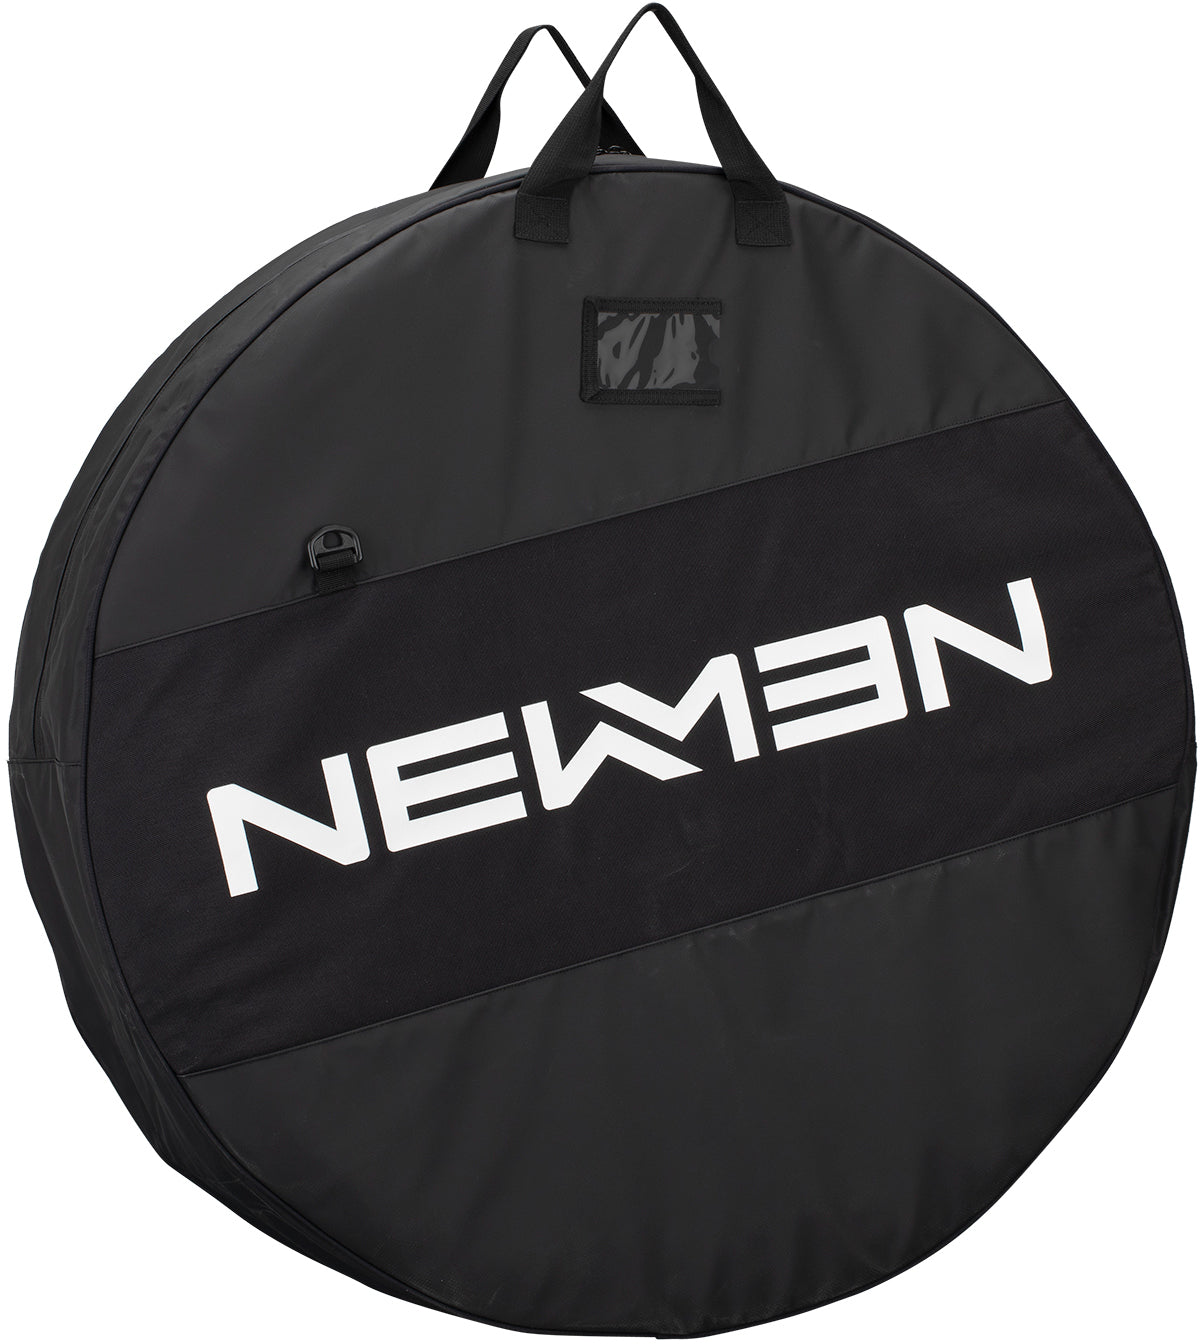 NEWMEN Wheel Bag